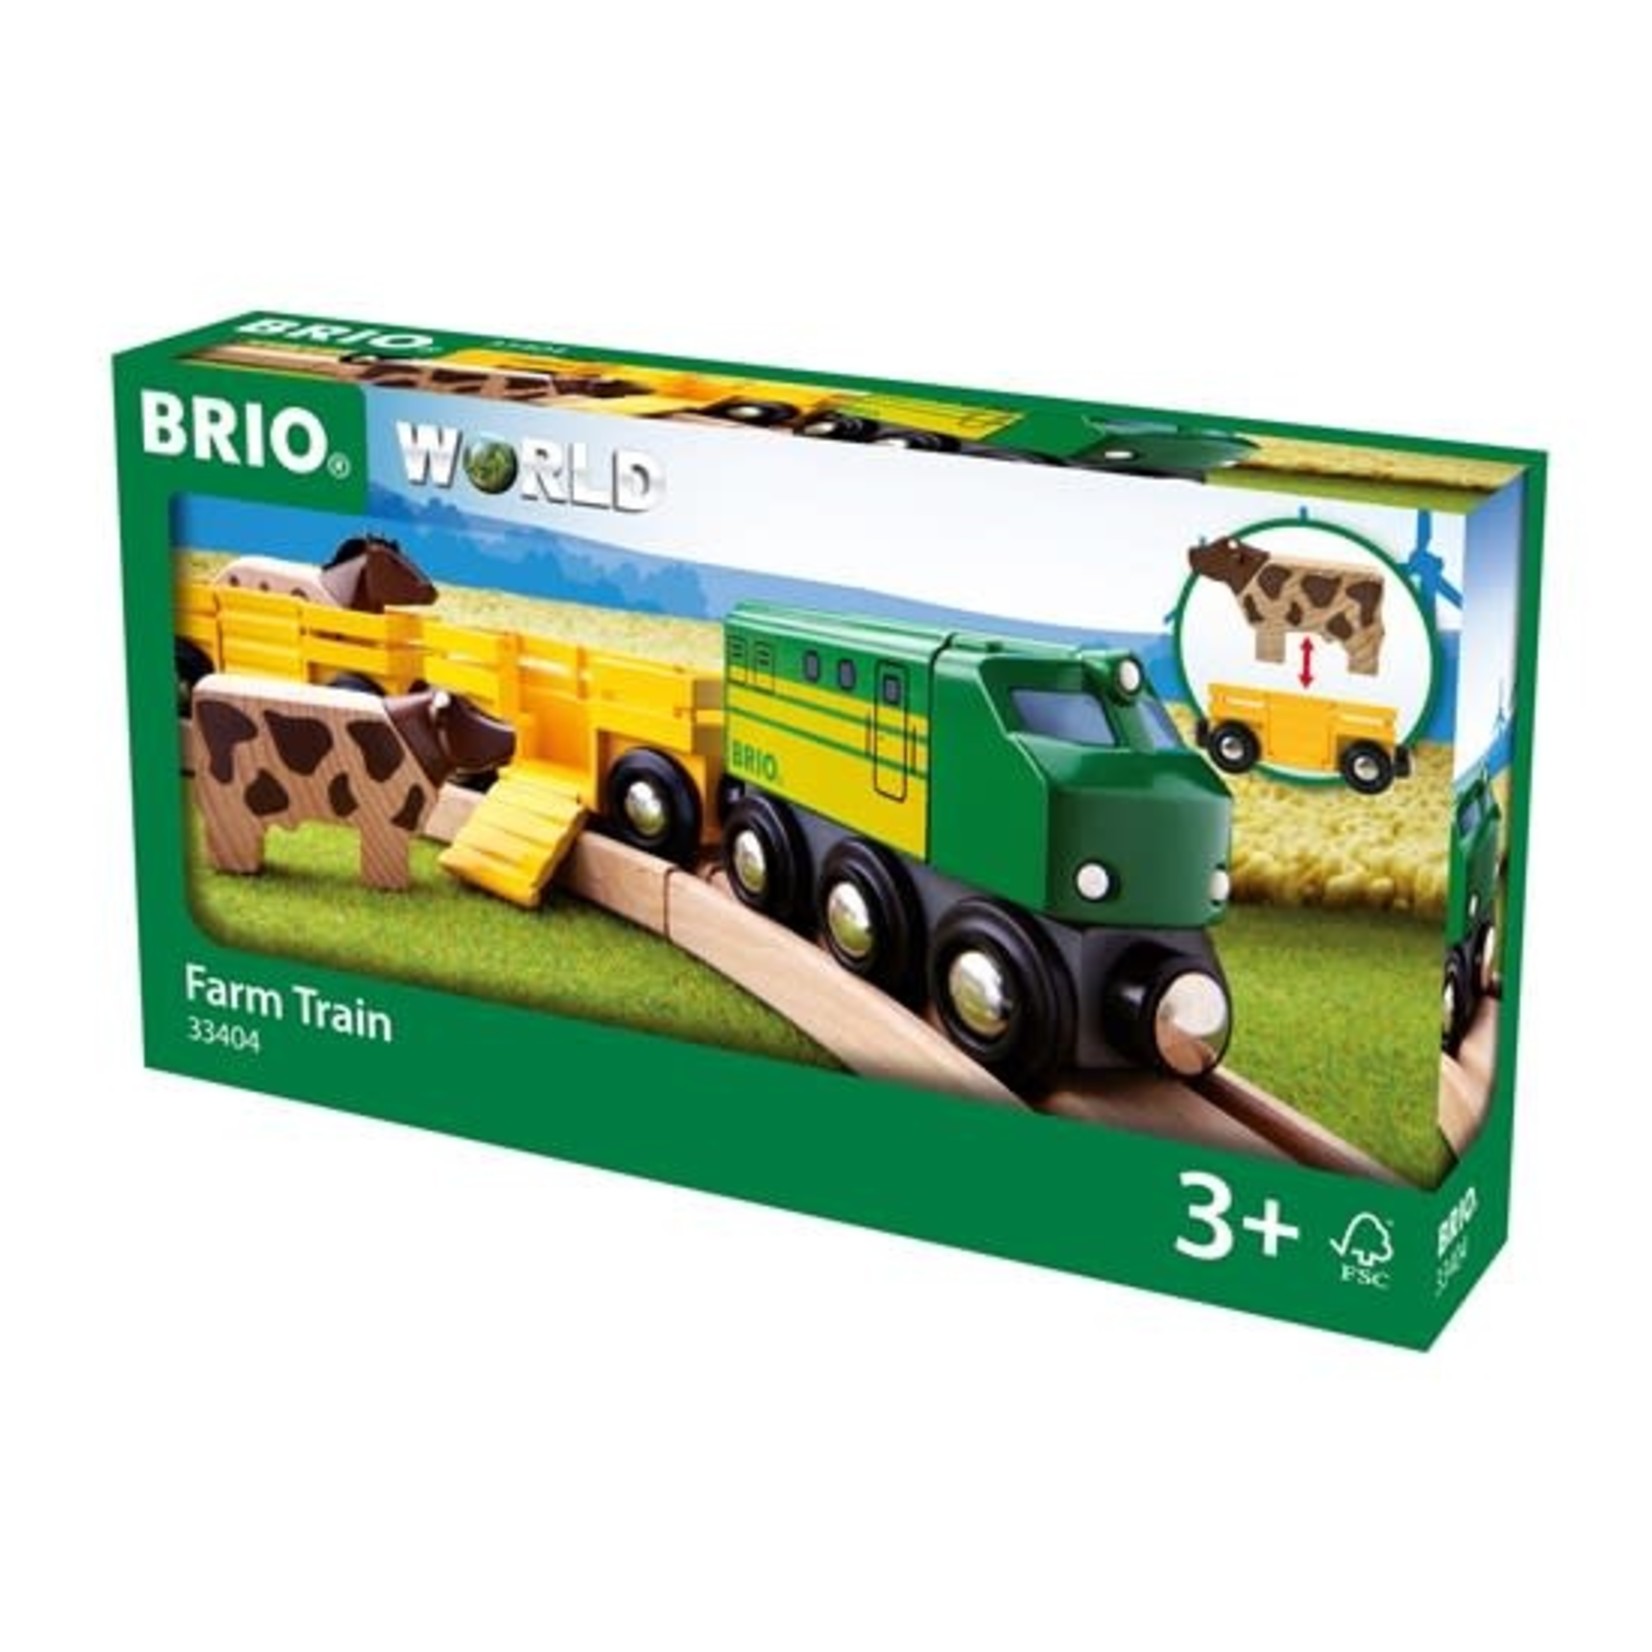 Brio Farm Train Set